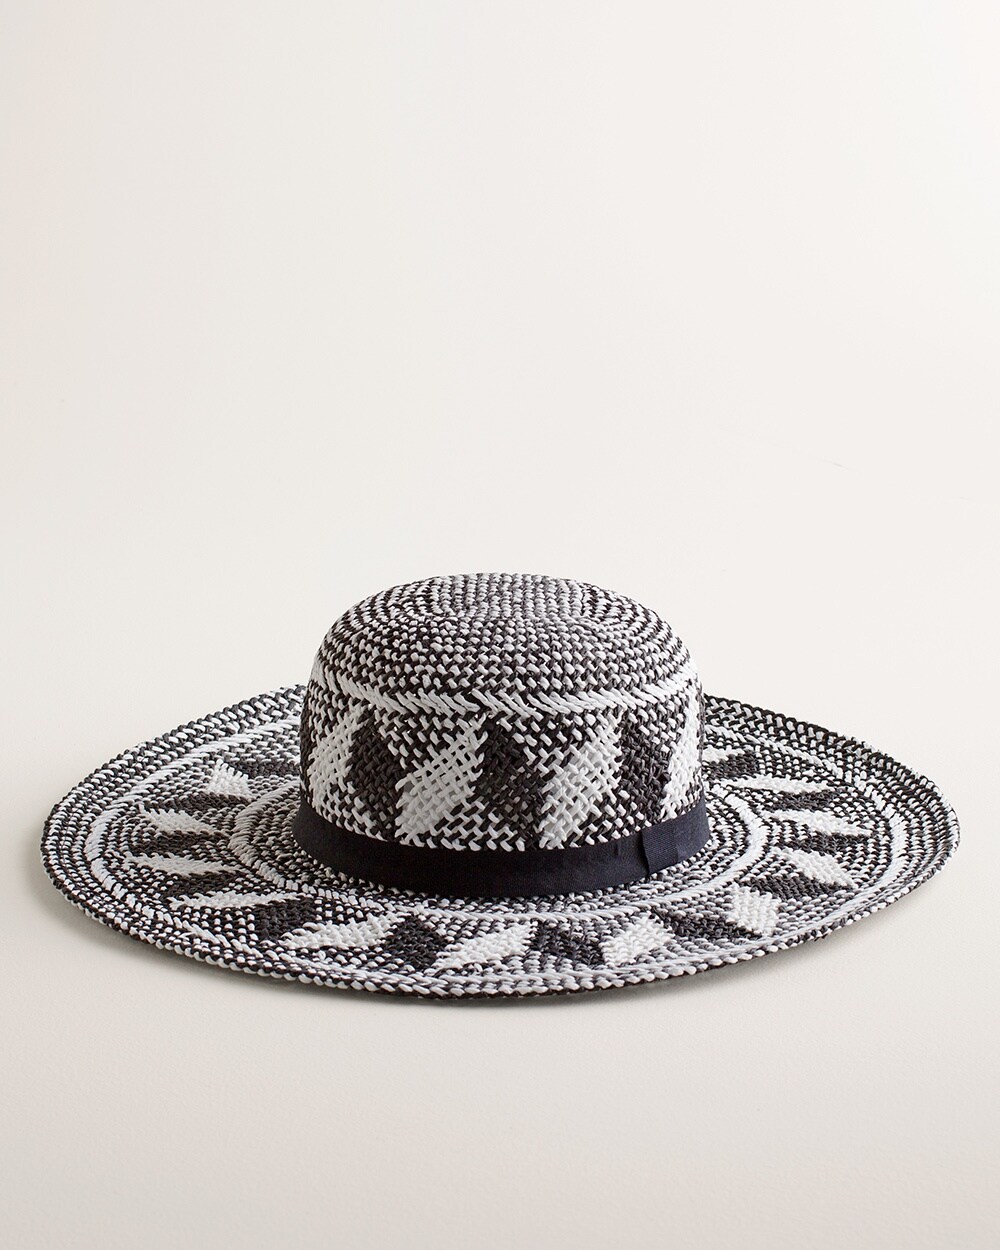 Mosaic-Inspired Straw Hat